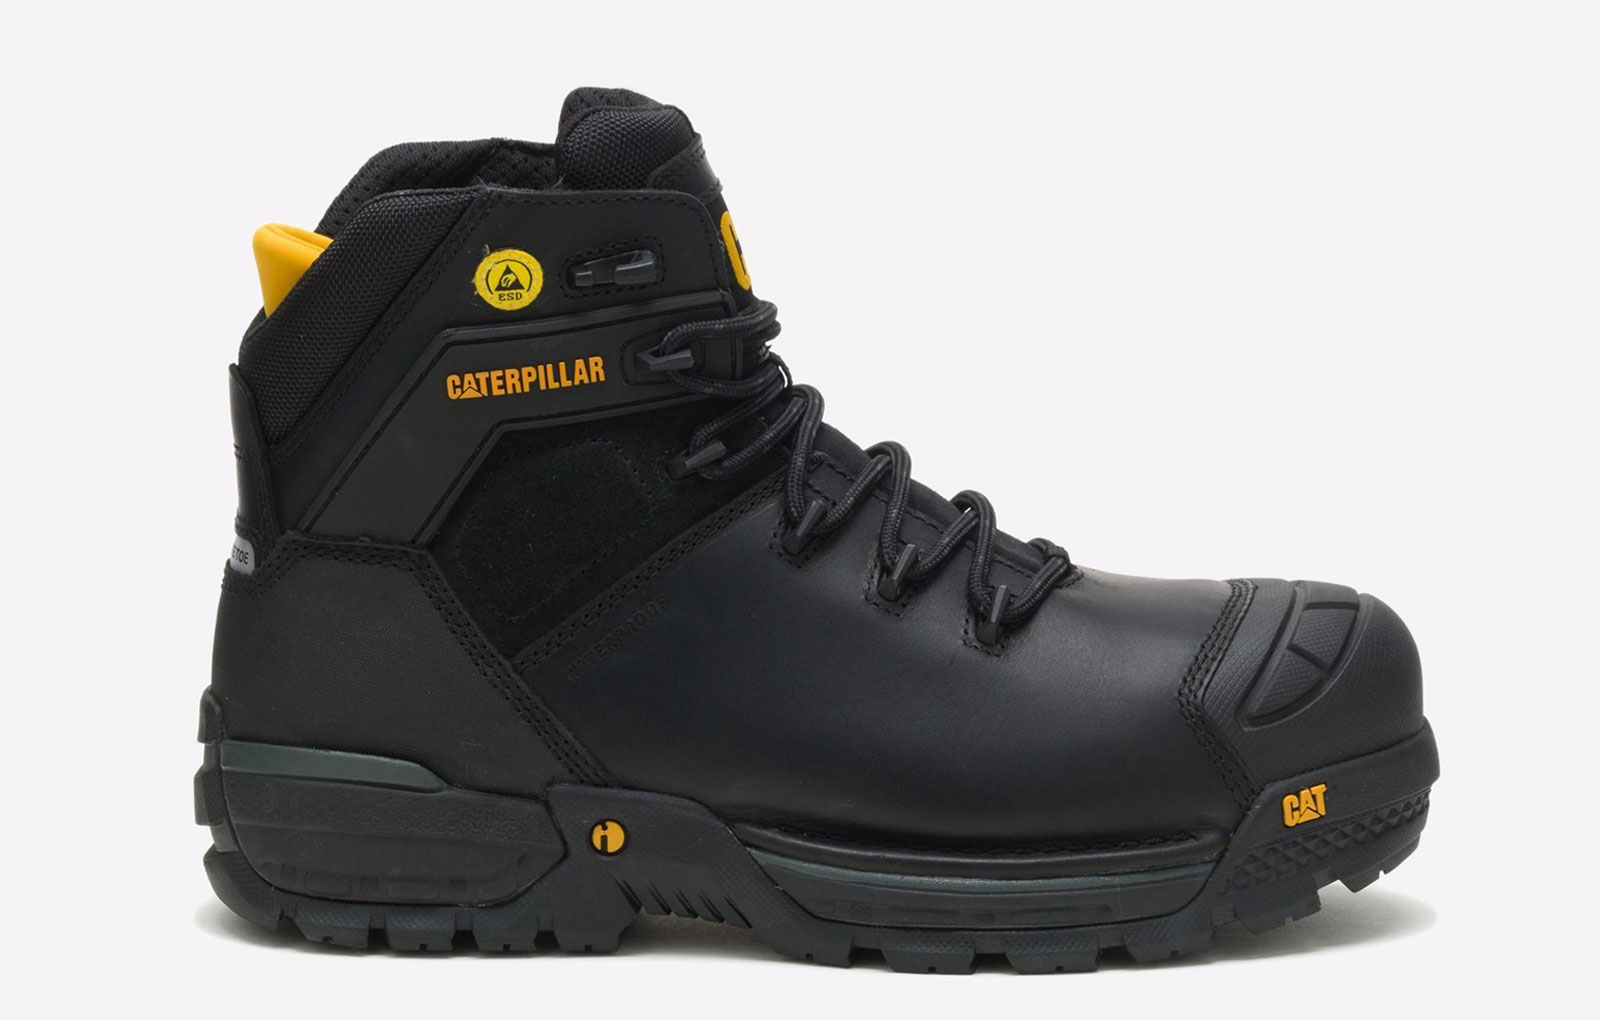 Caterpillar Excavator WATERPROOF Safety Boots Mens - GRD-33606-57471-11